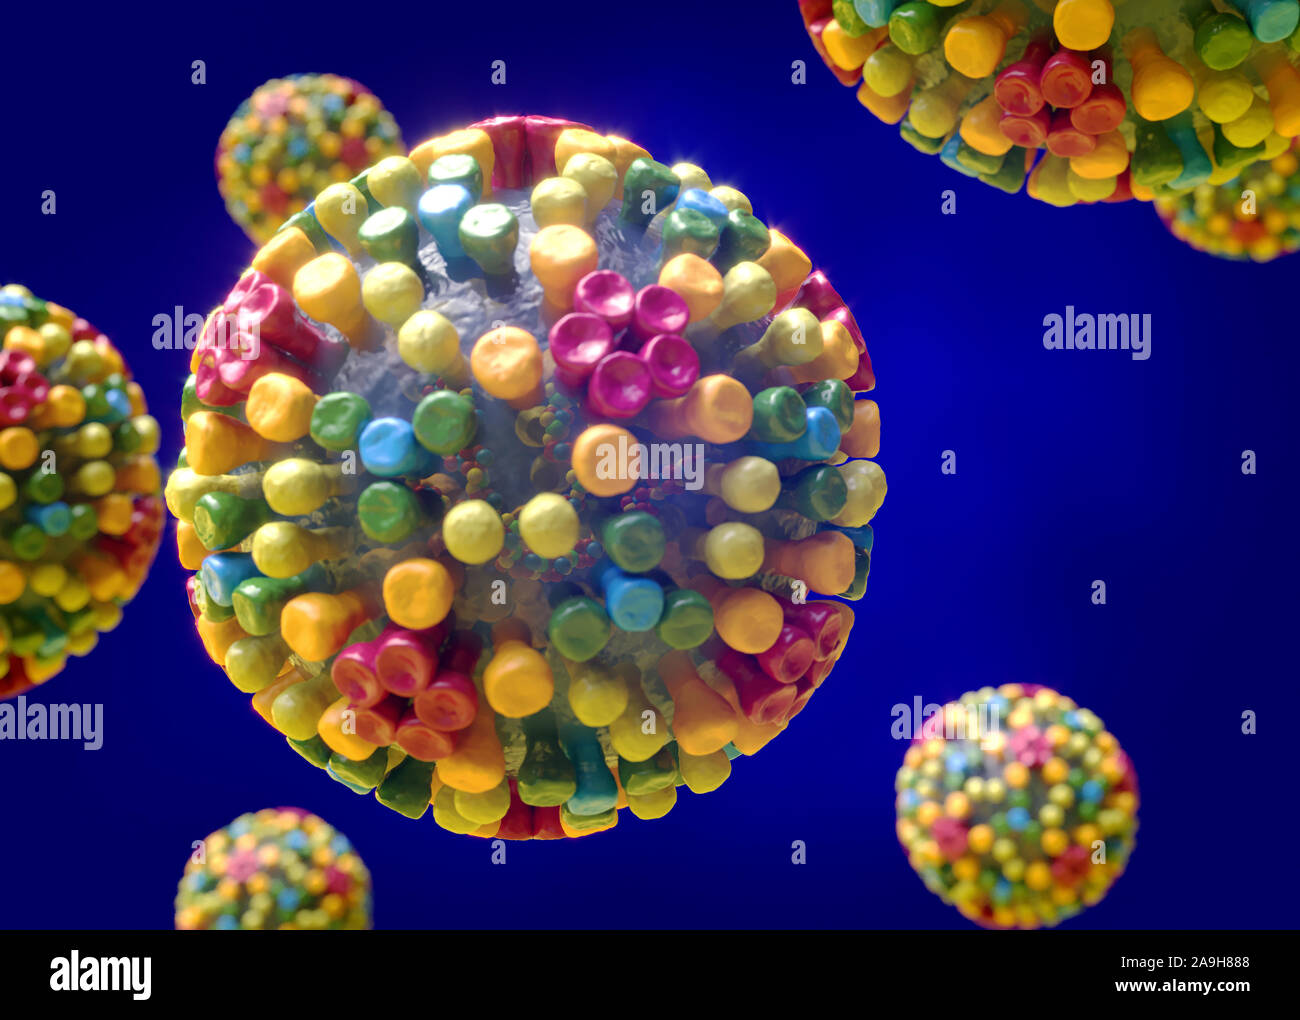 Bluetongue virus structure, illustration Stock Photo